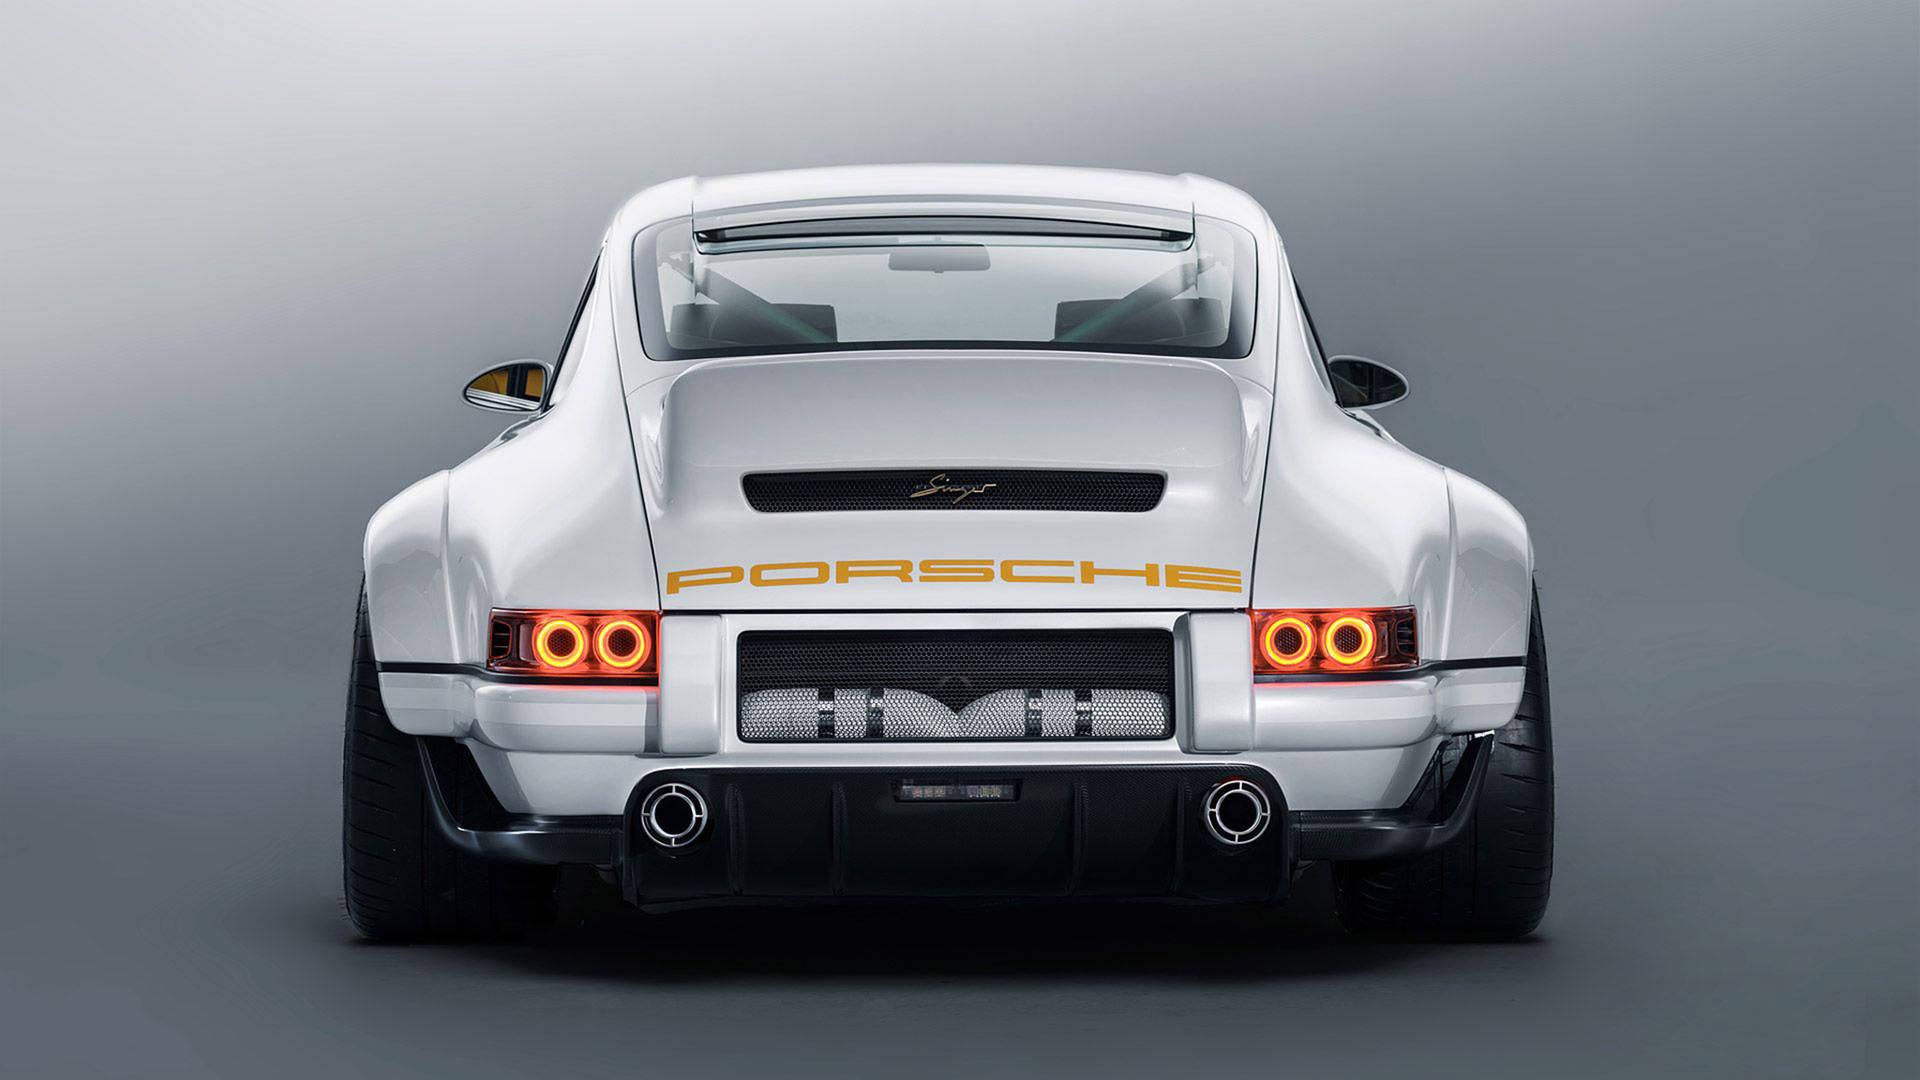 Exquisite Rear View Of A White Singer Porsche Background